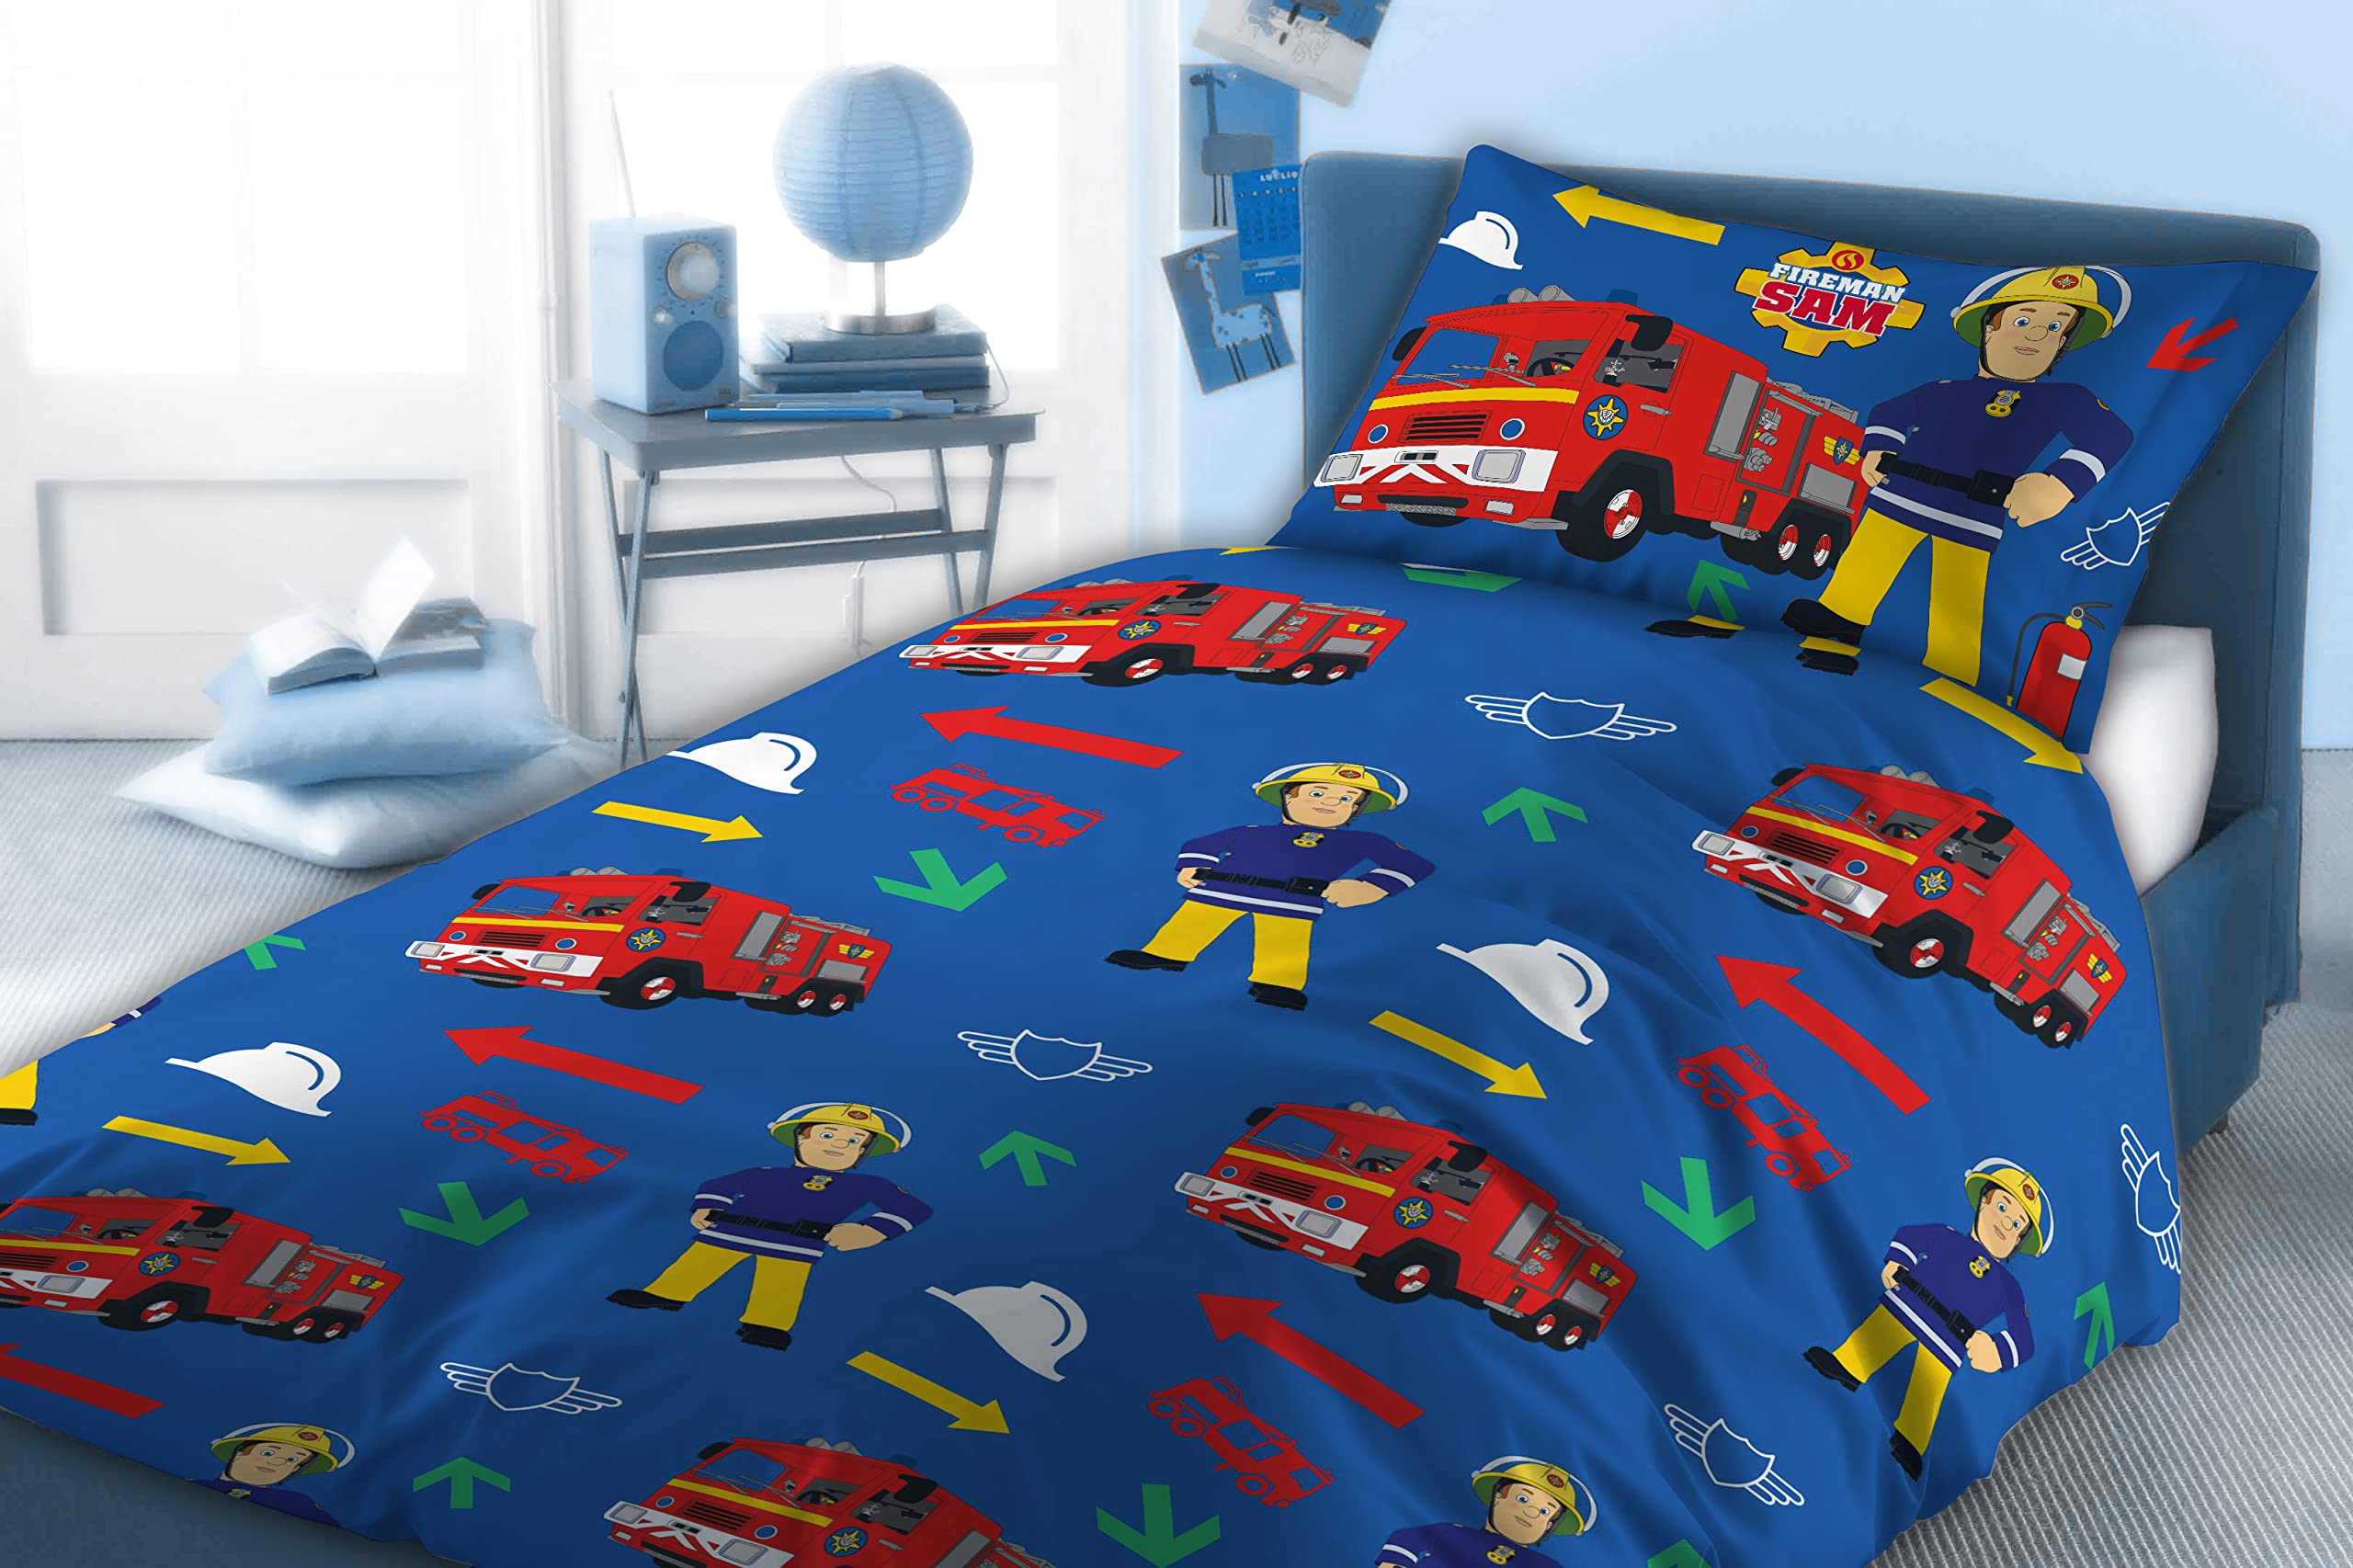 Fireman Sam Firefighter Polycotton Kids Single Duvet Cover Set Bedding Bed Set